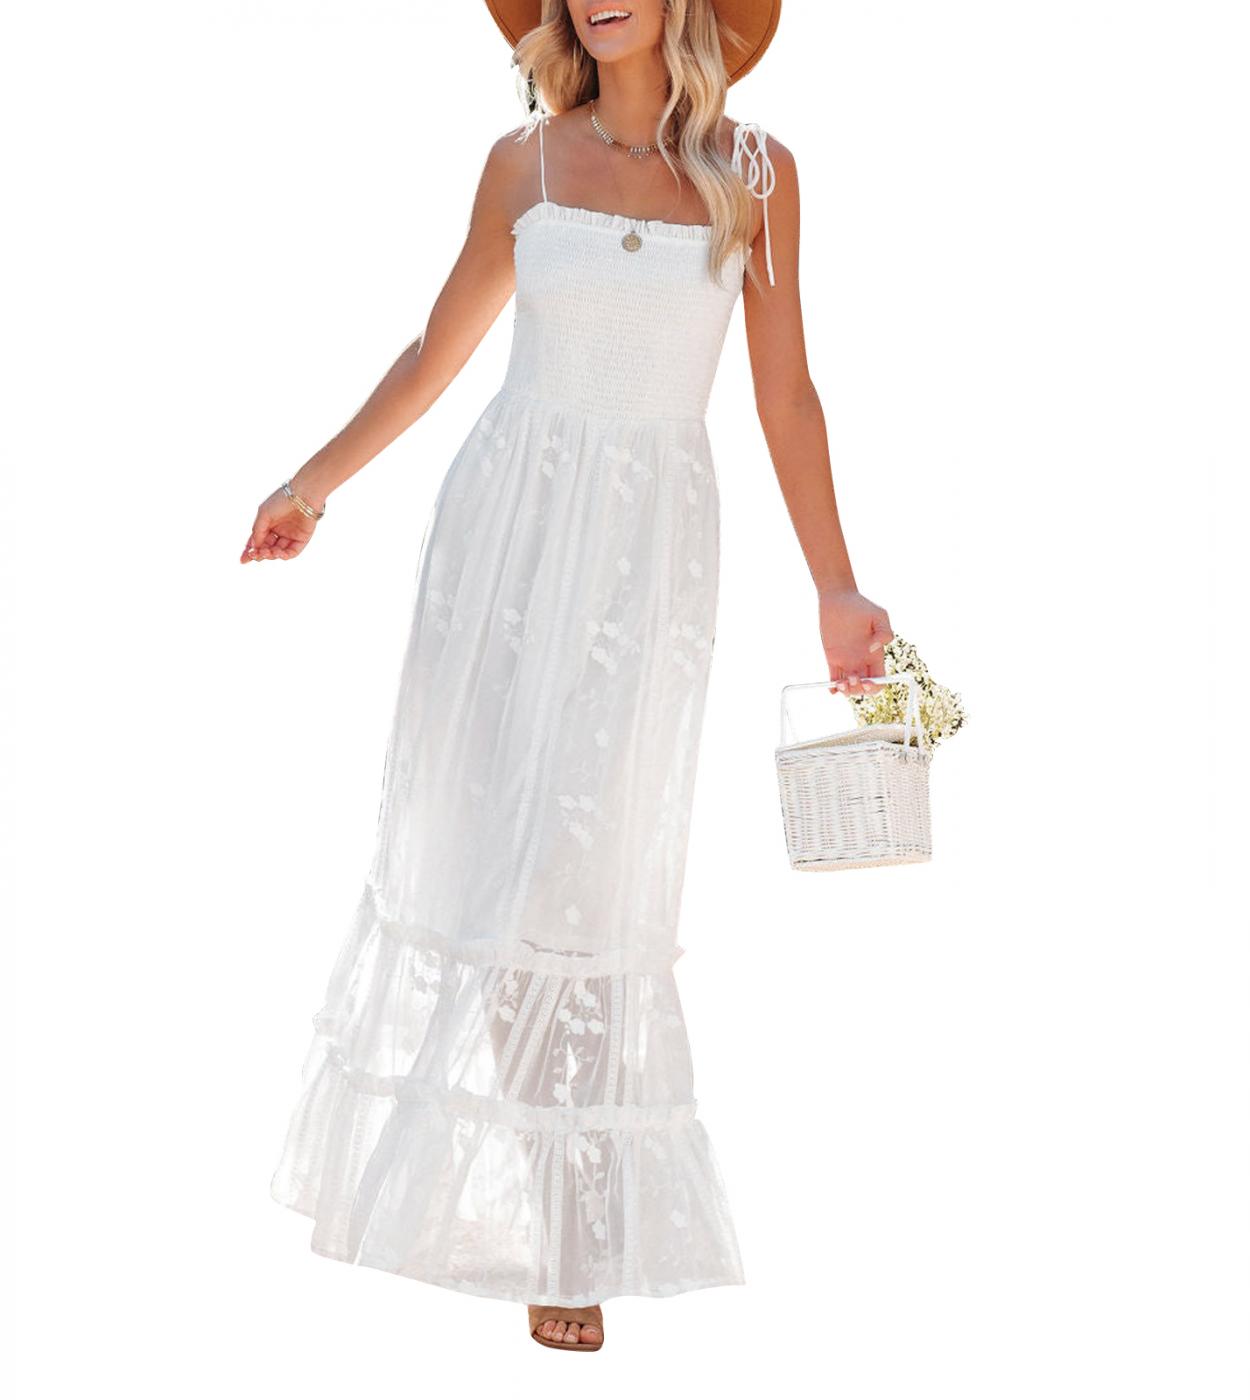 Womens Summer Spaghetti Straps Sleeveless Ruffle Backless Long Lace Posy Dress High Waist Swing Dress Beachwear